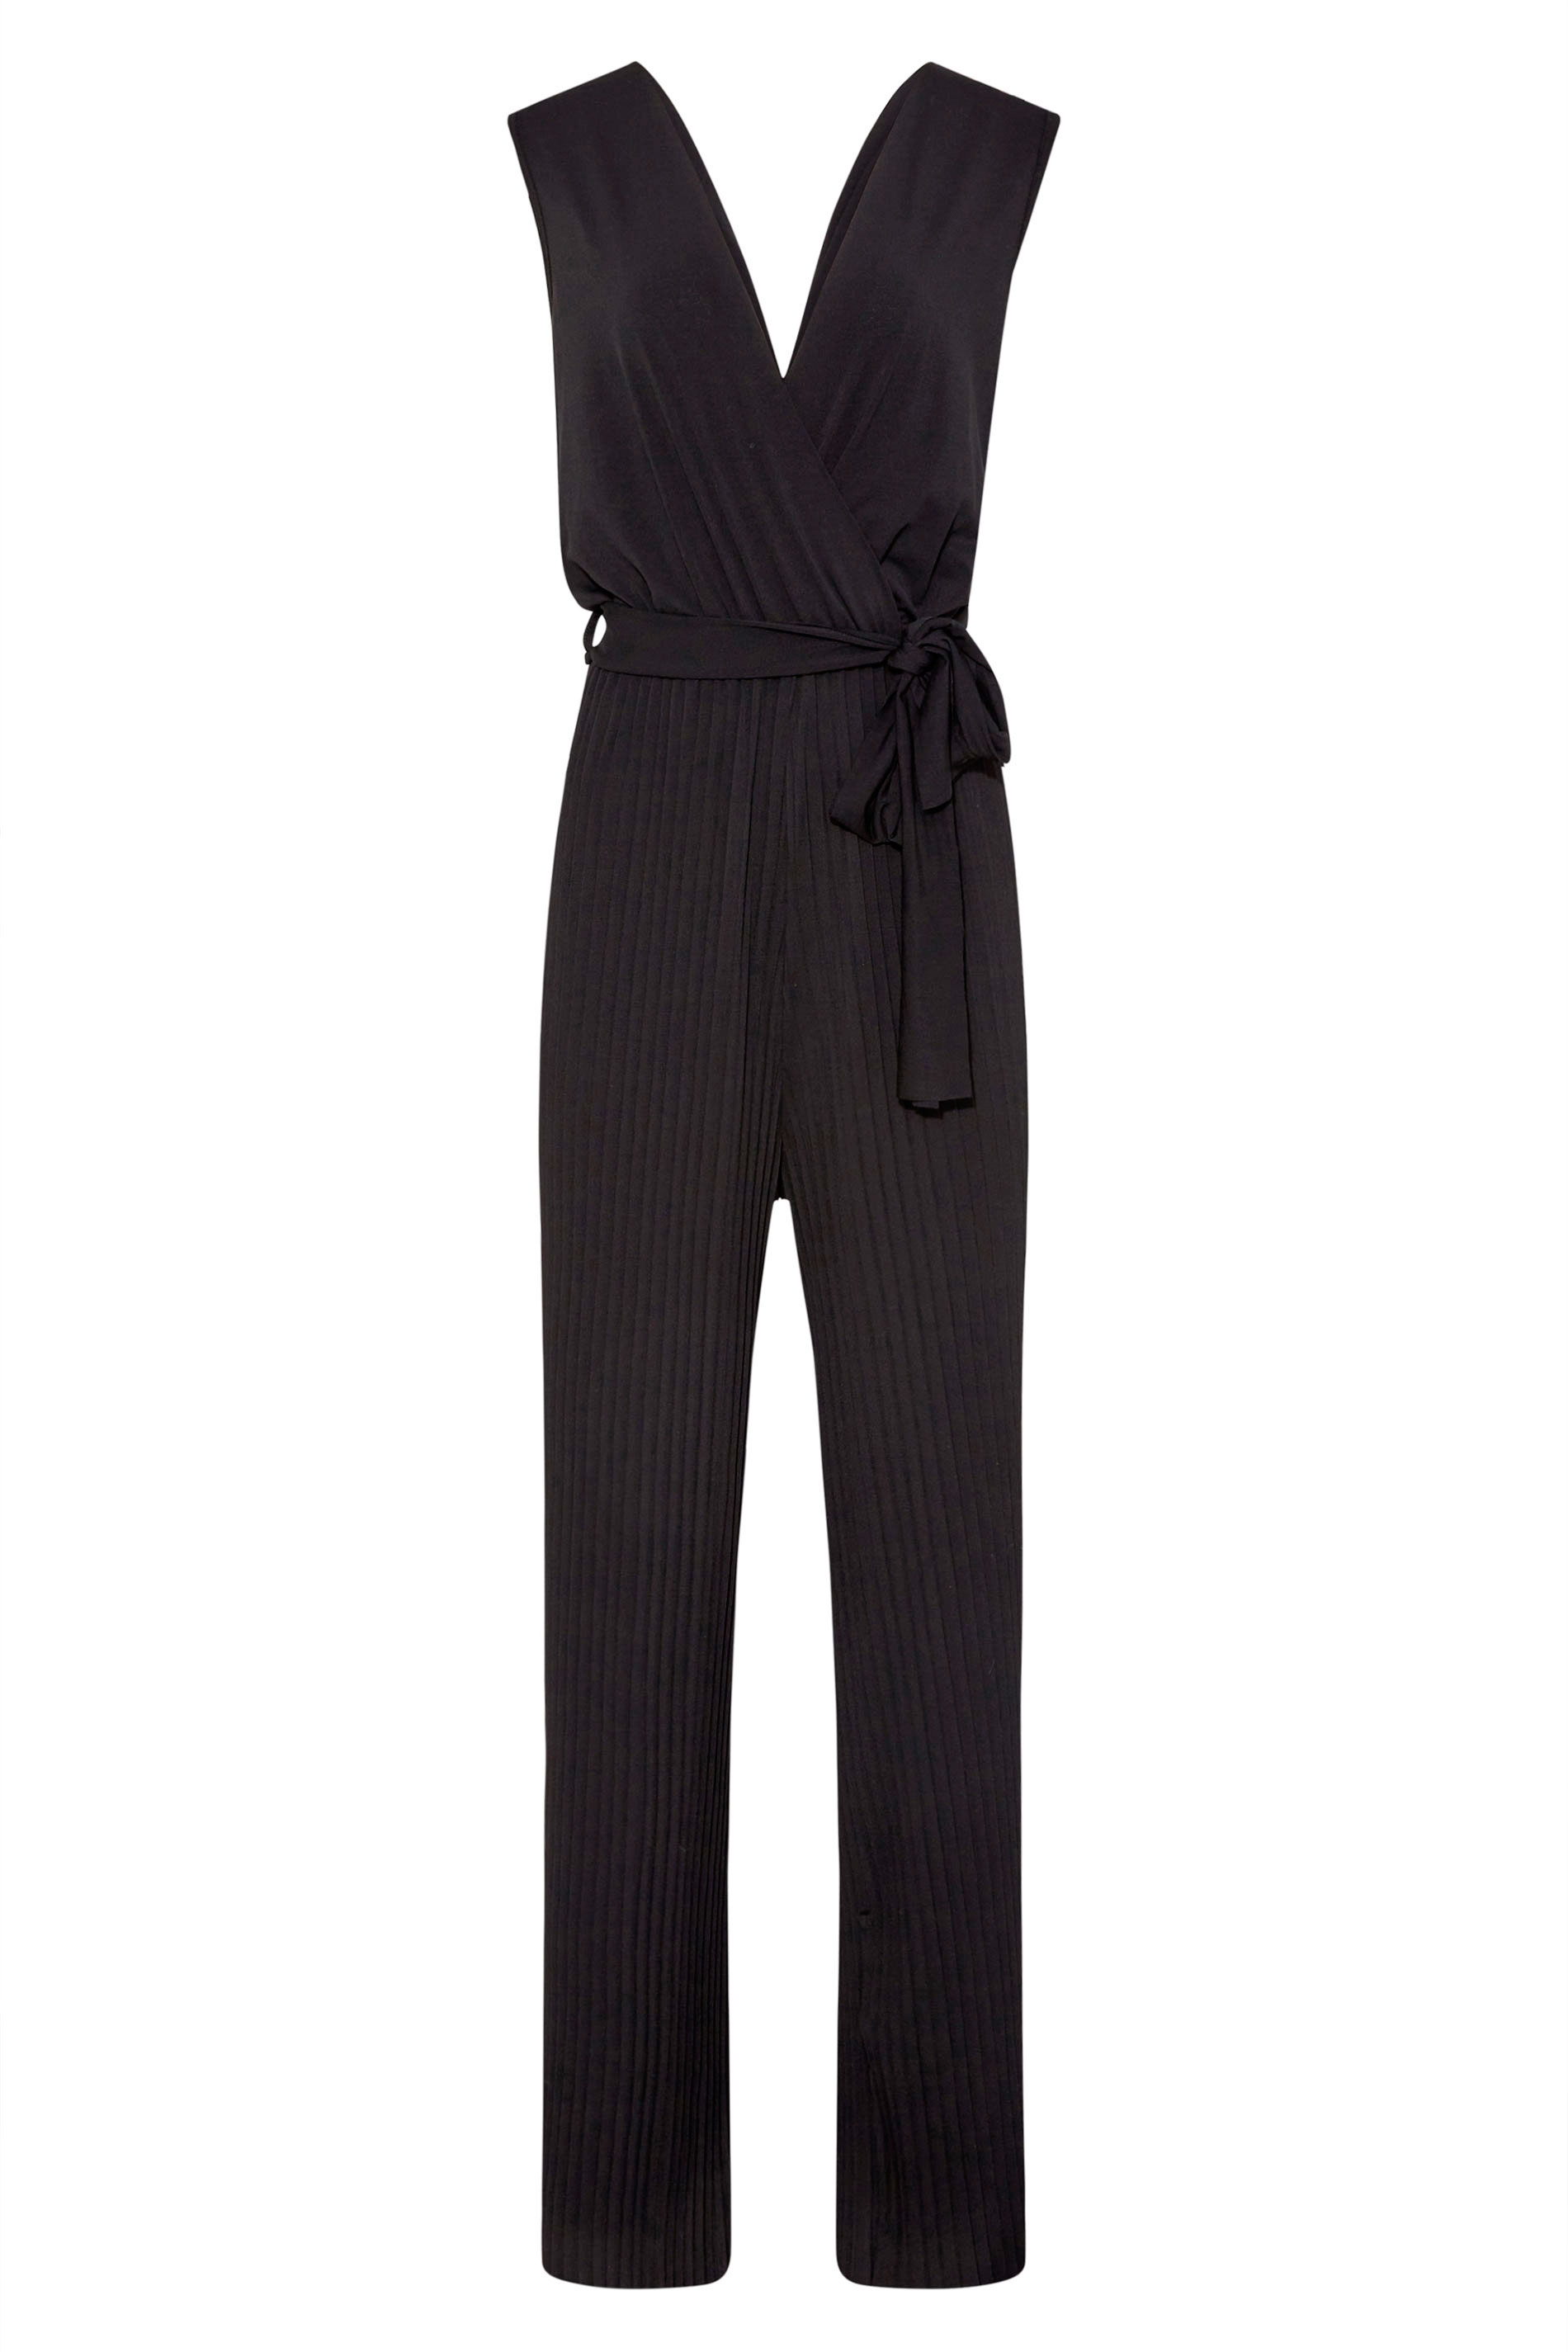 LTS Tall Women's Black Pleated Wrap Wide Leg Jumpsuit | Long Tall Sally 2